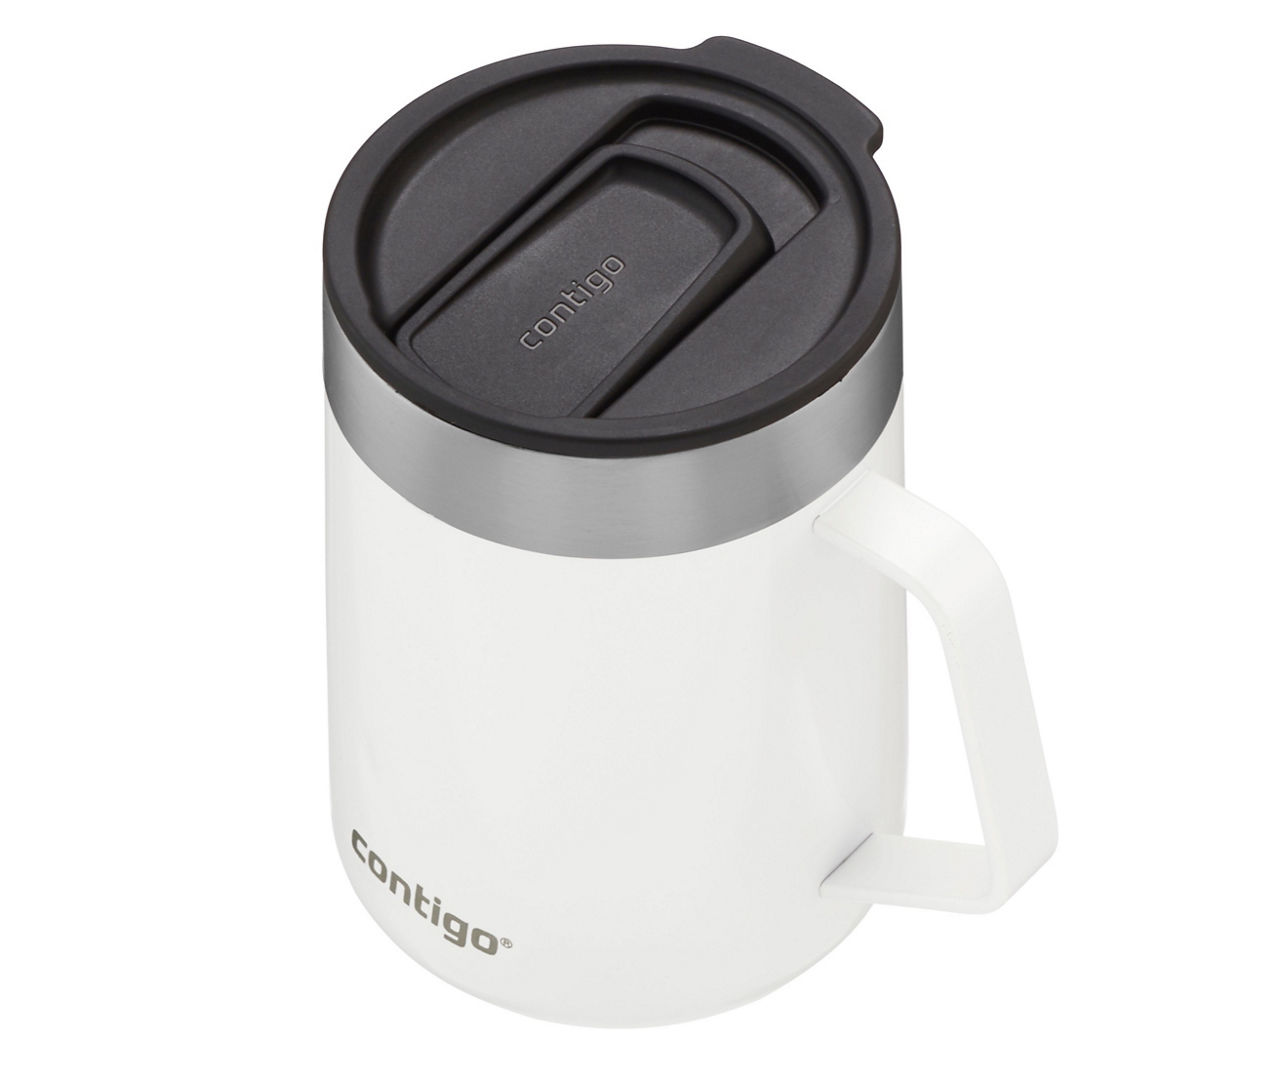 Contigo 14-oz. Stainless Steel Vacuum-Insulated Mug with Handle